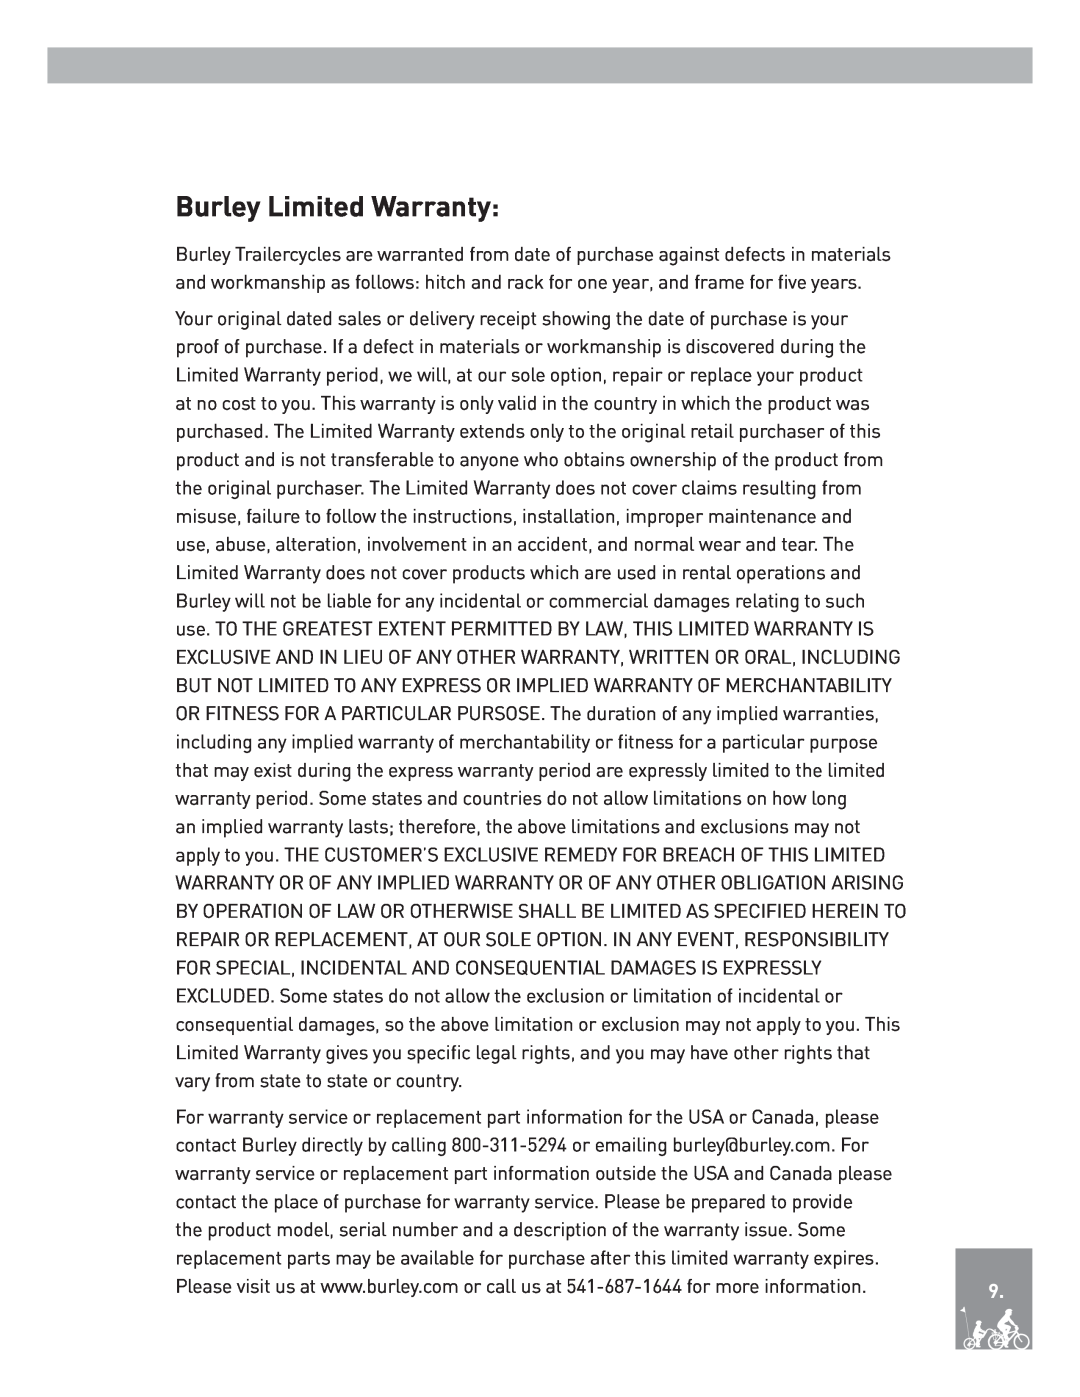 Burley Kazoo, Piccolo instruction manual Burley Limited Warranty 